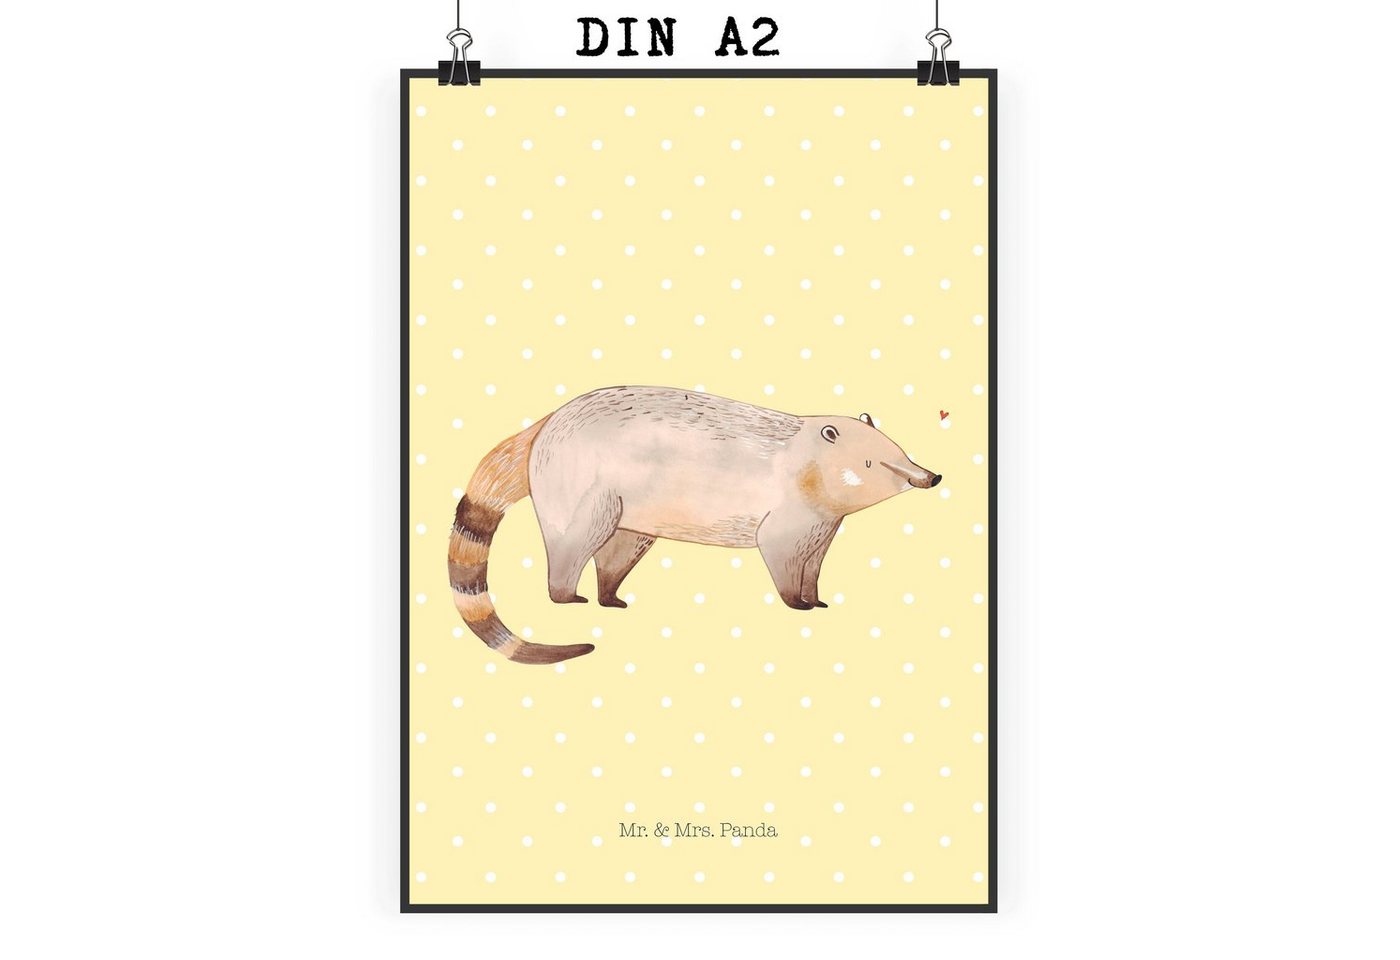 Mr. & Mrs. Panda Poster DIN A2 Nasenbär - Gelb Pastell - Geschenk, Wanddeko, Nasenbären, Tier, Nasenbär (1 St), Ausdrucksstark von Mr. & Mrs. Panda